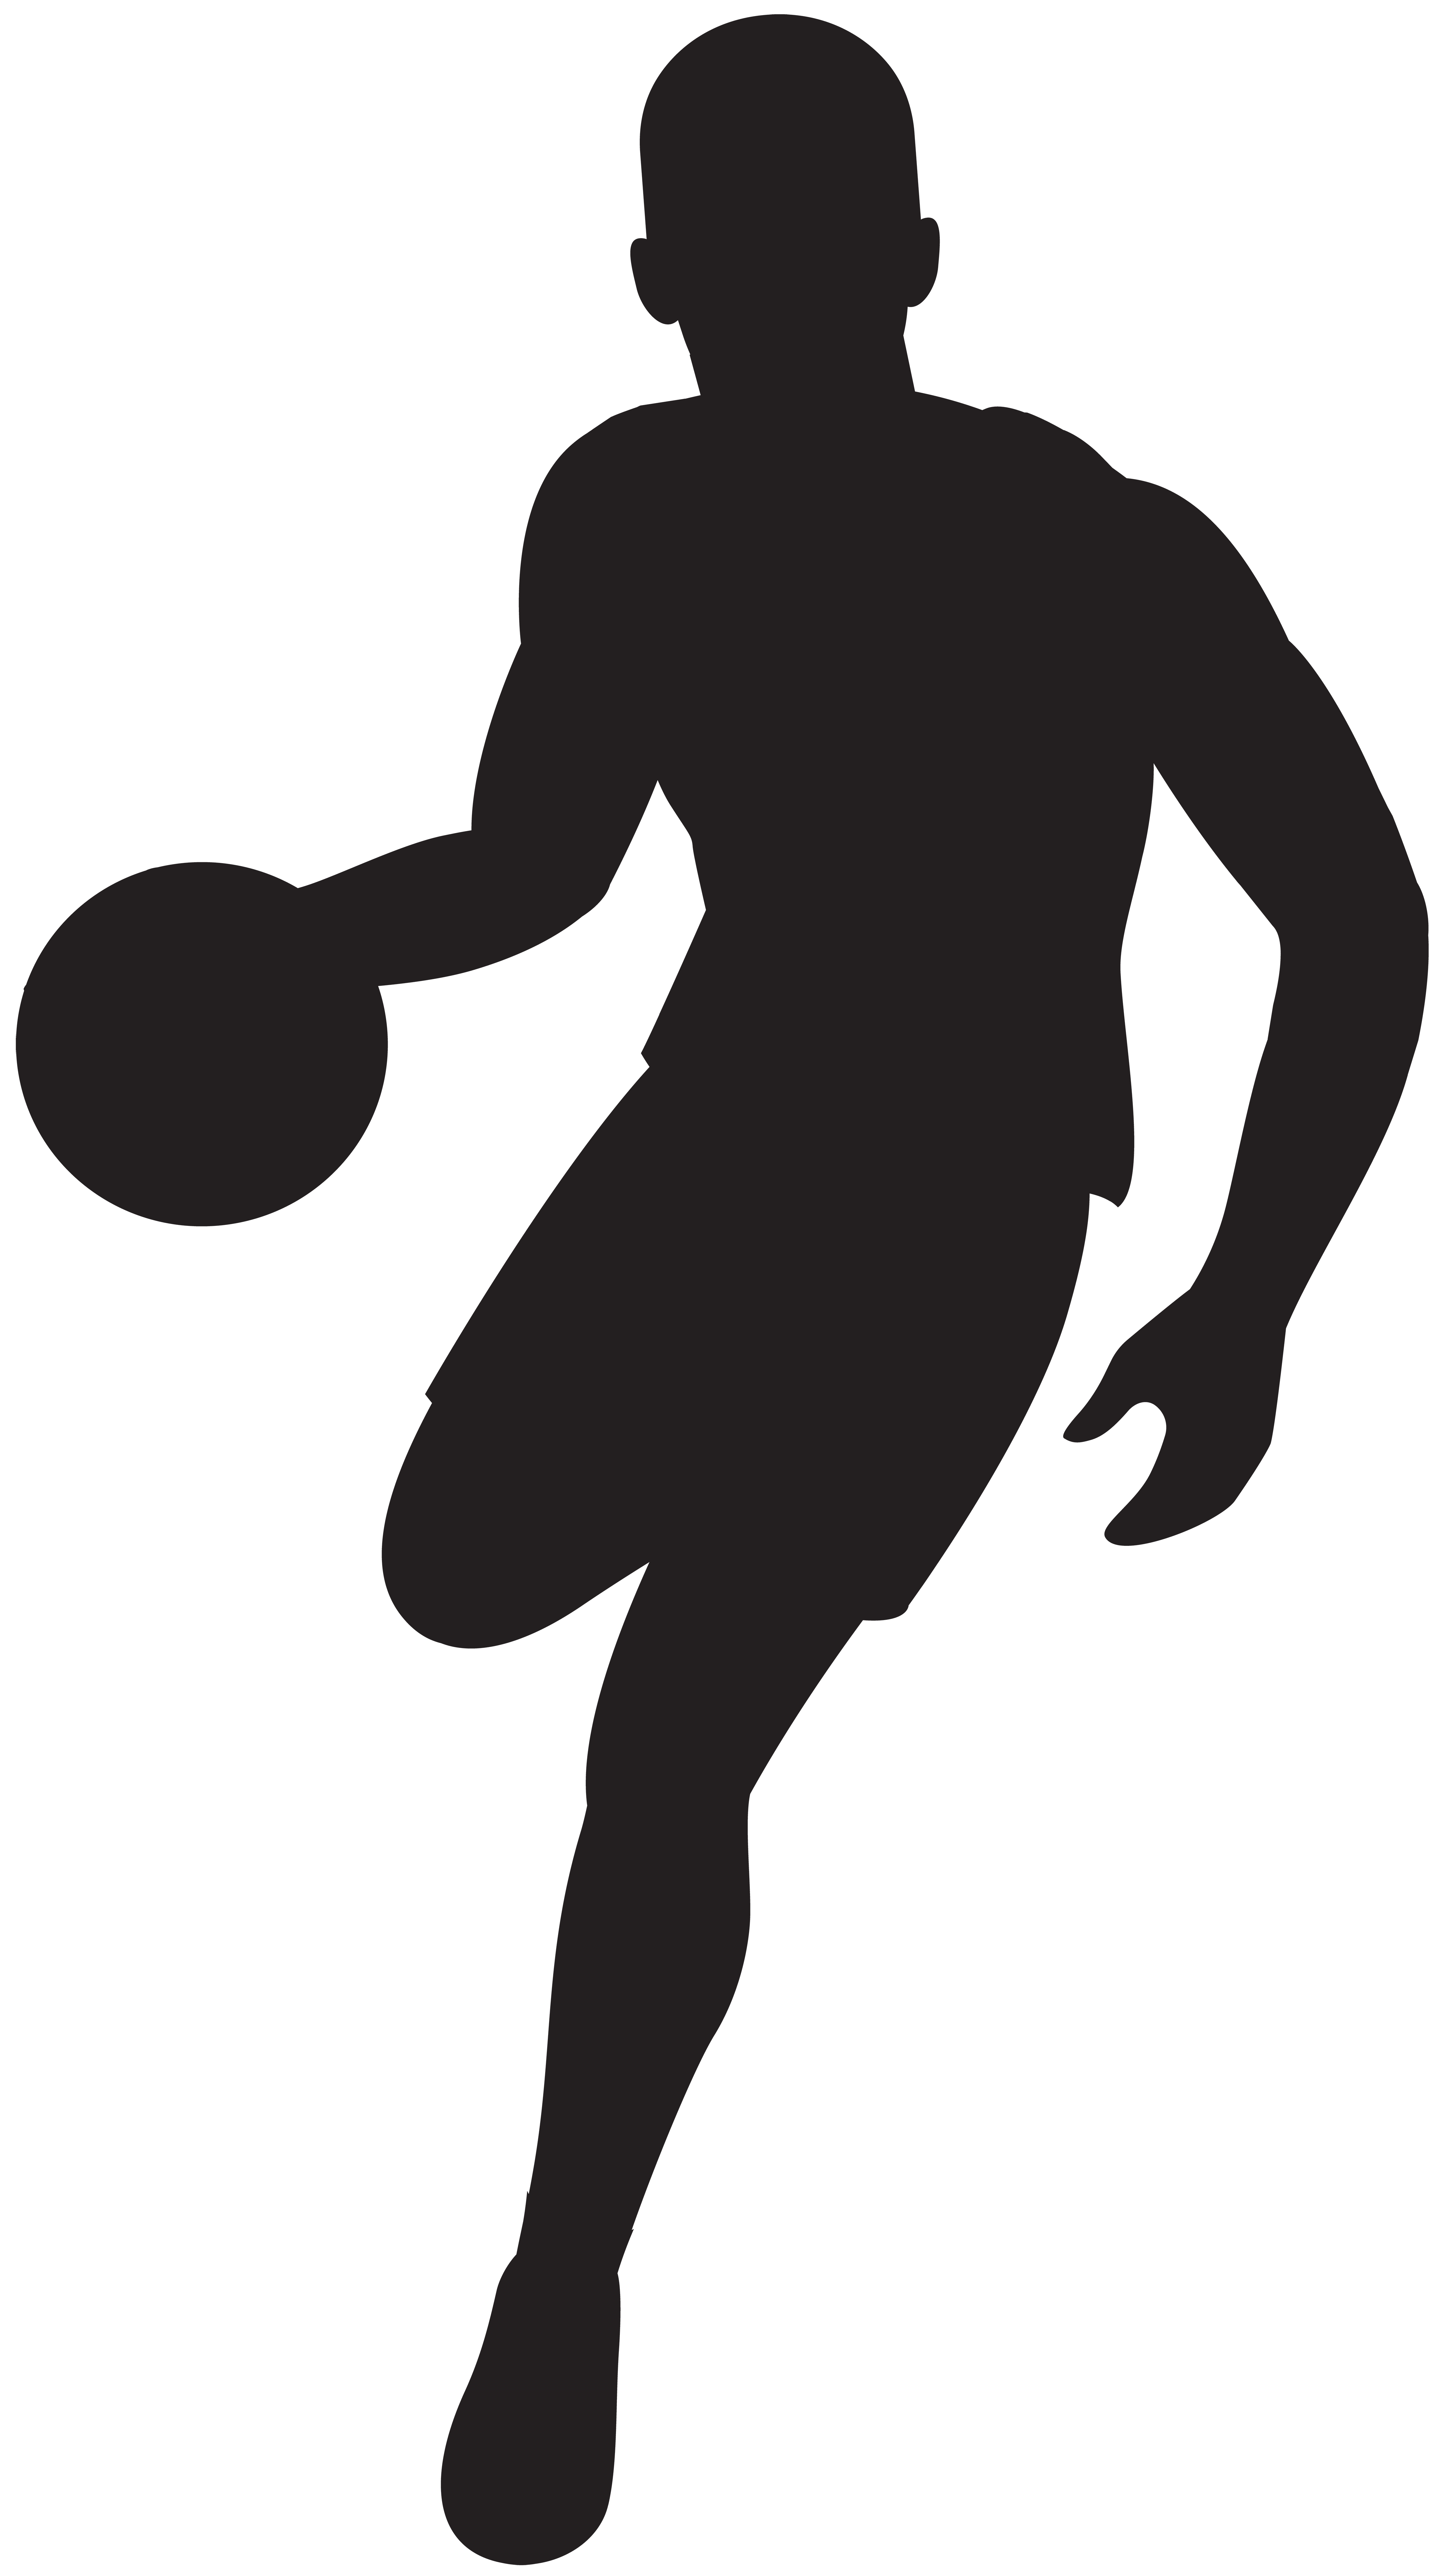 Basketball player silhouette.